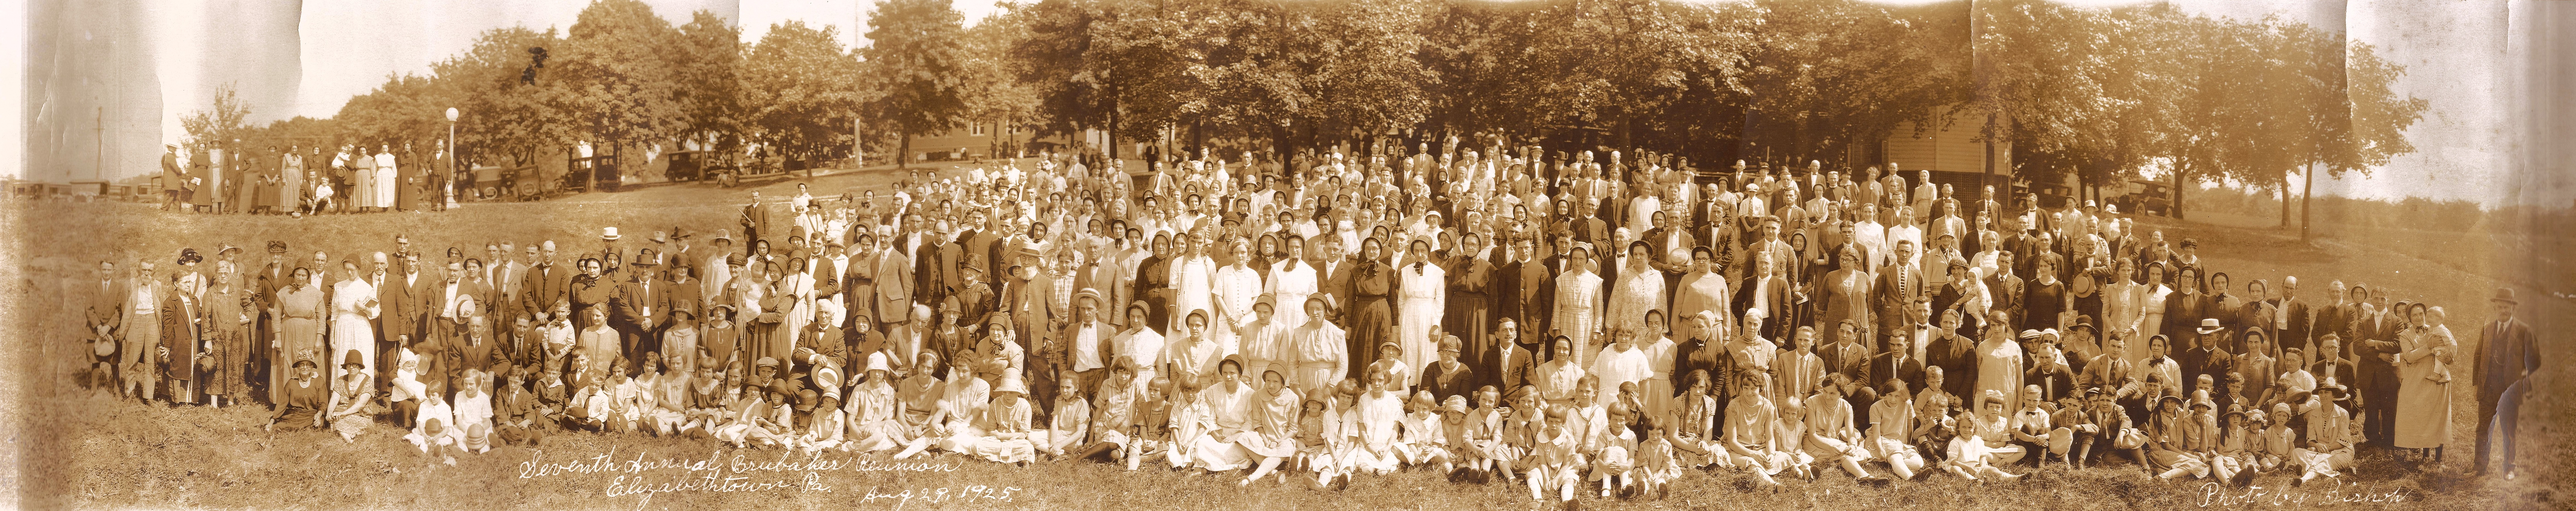 1925 family reunion